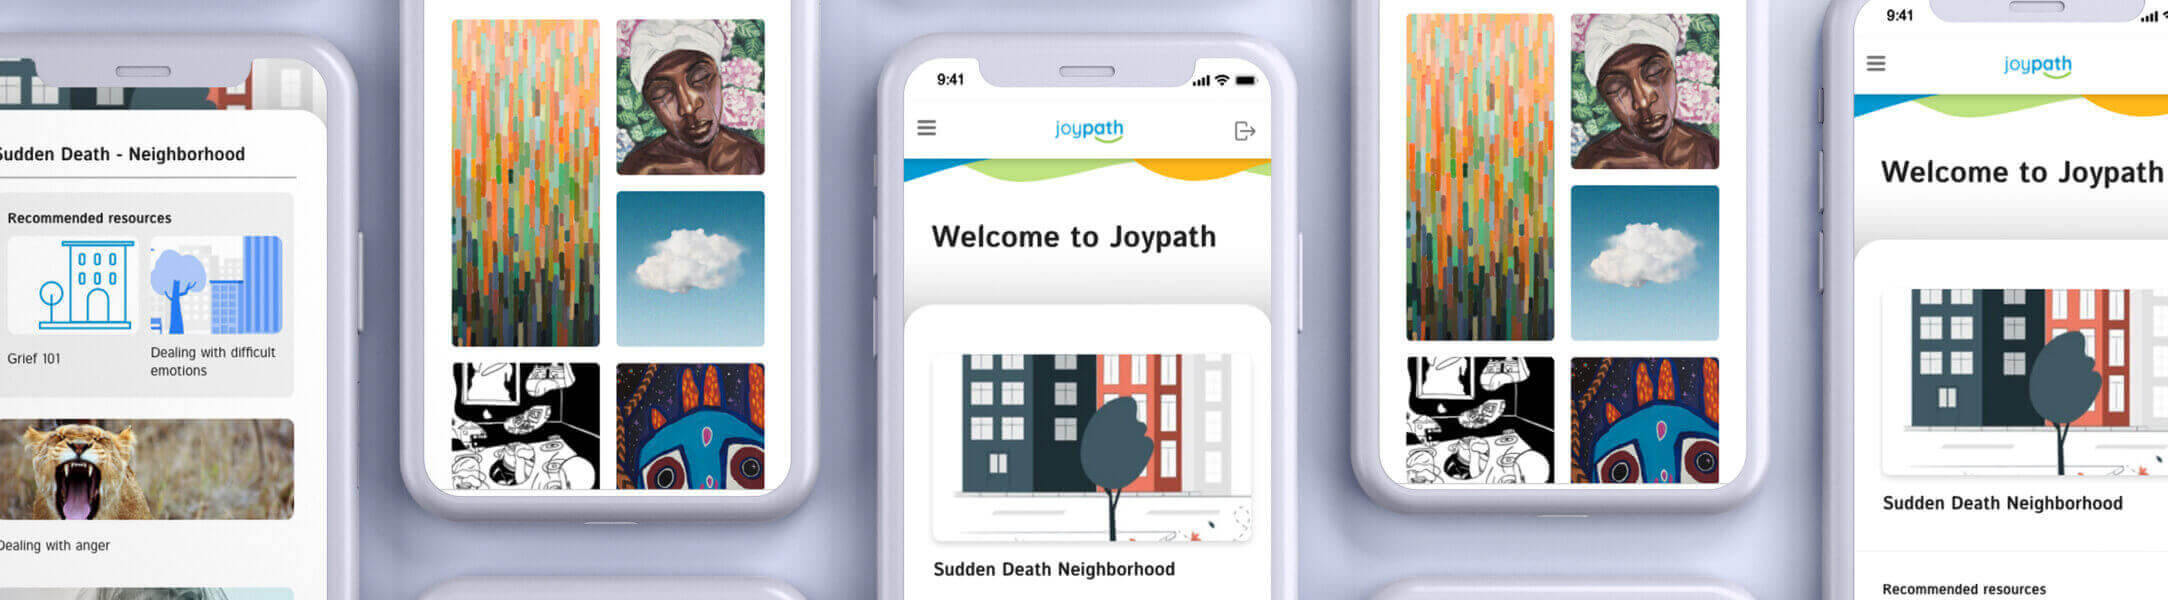 Joypath’s mobile app screens